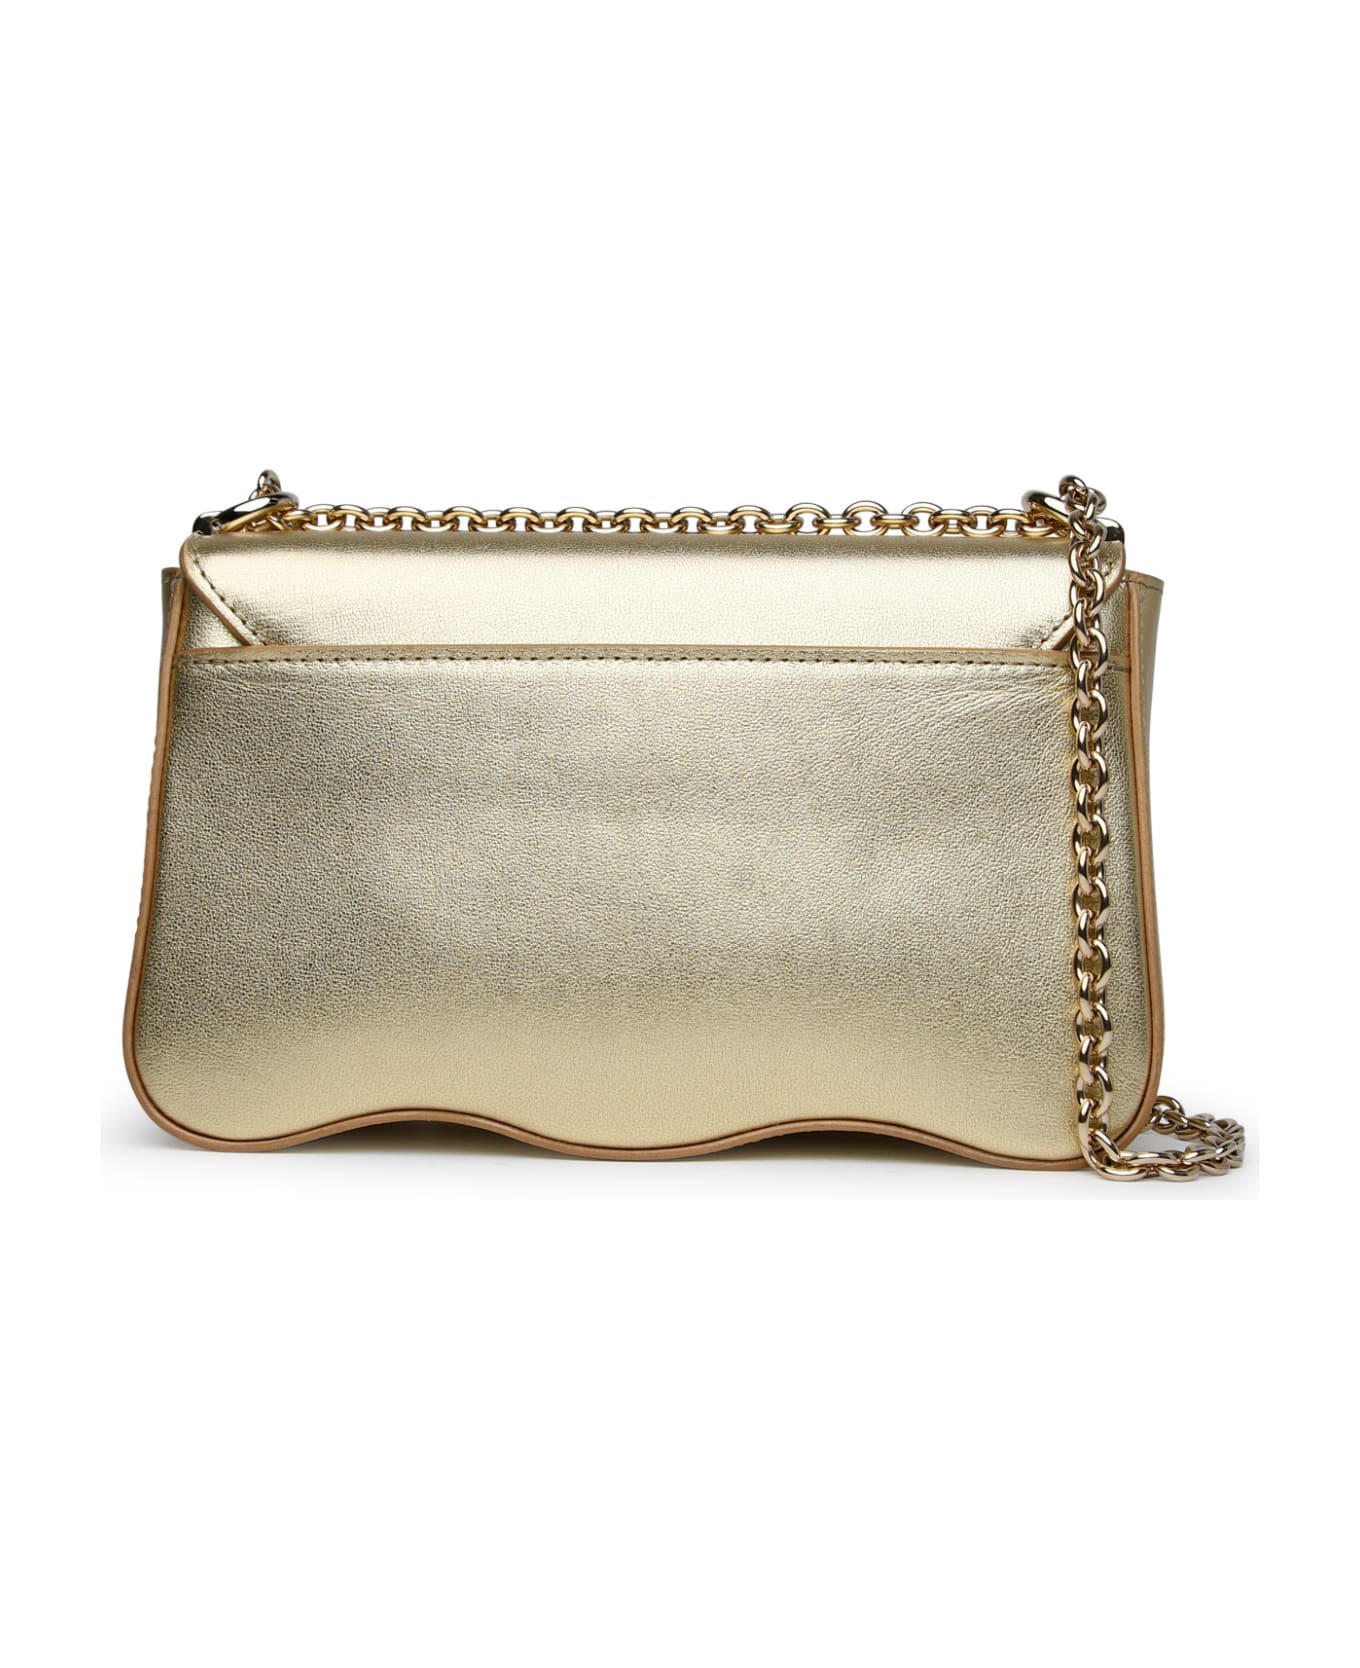 Furla 'furla 1927' Gold Calf Leather Bag - Oro ショルダーバッグ